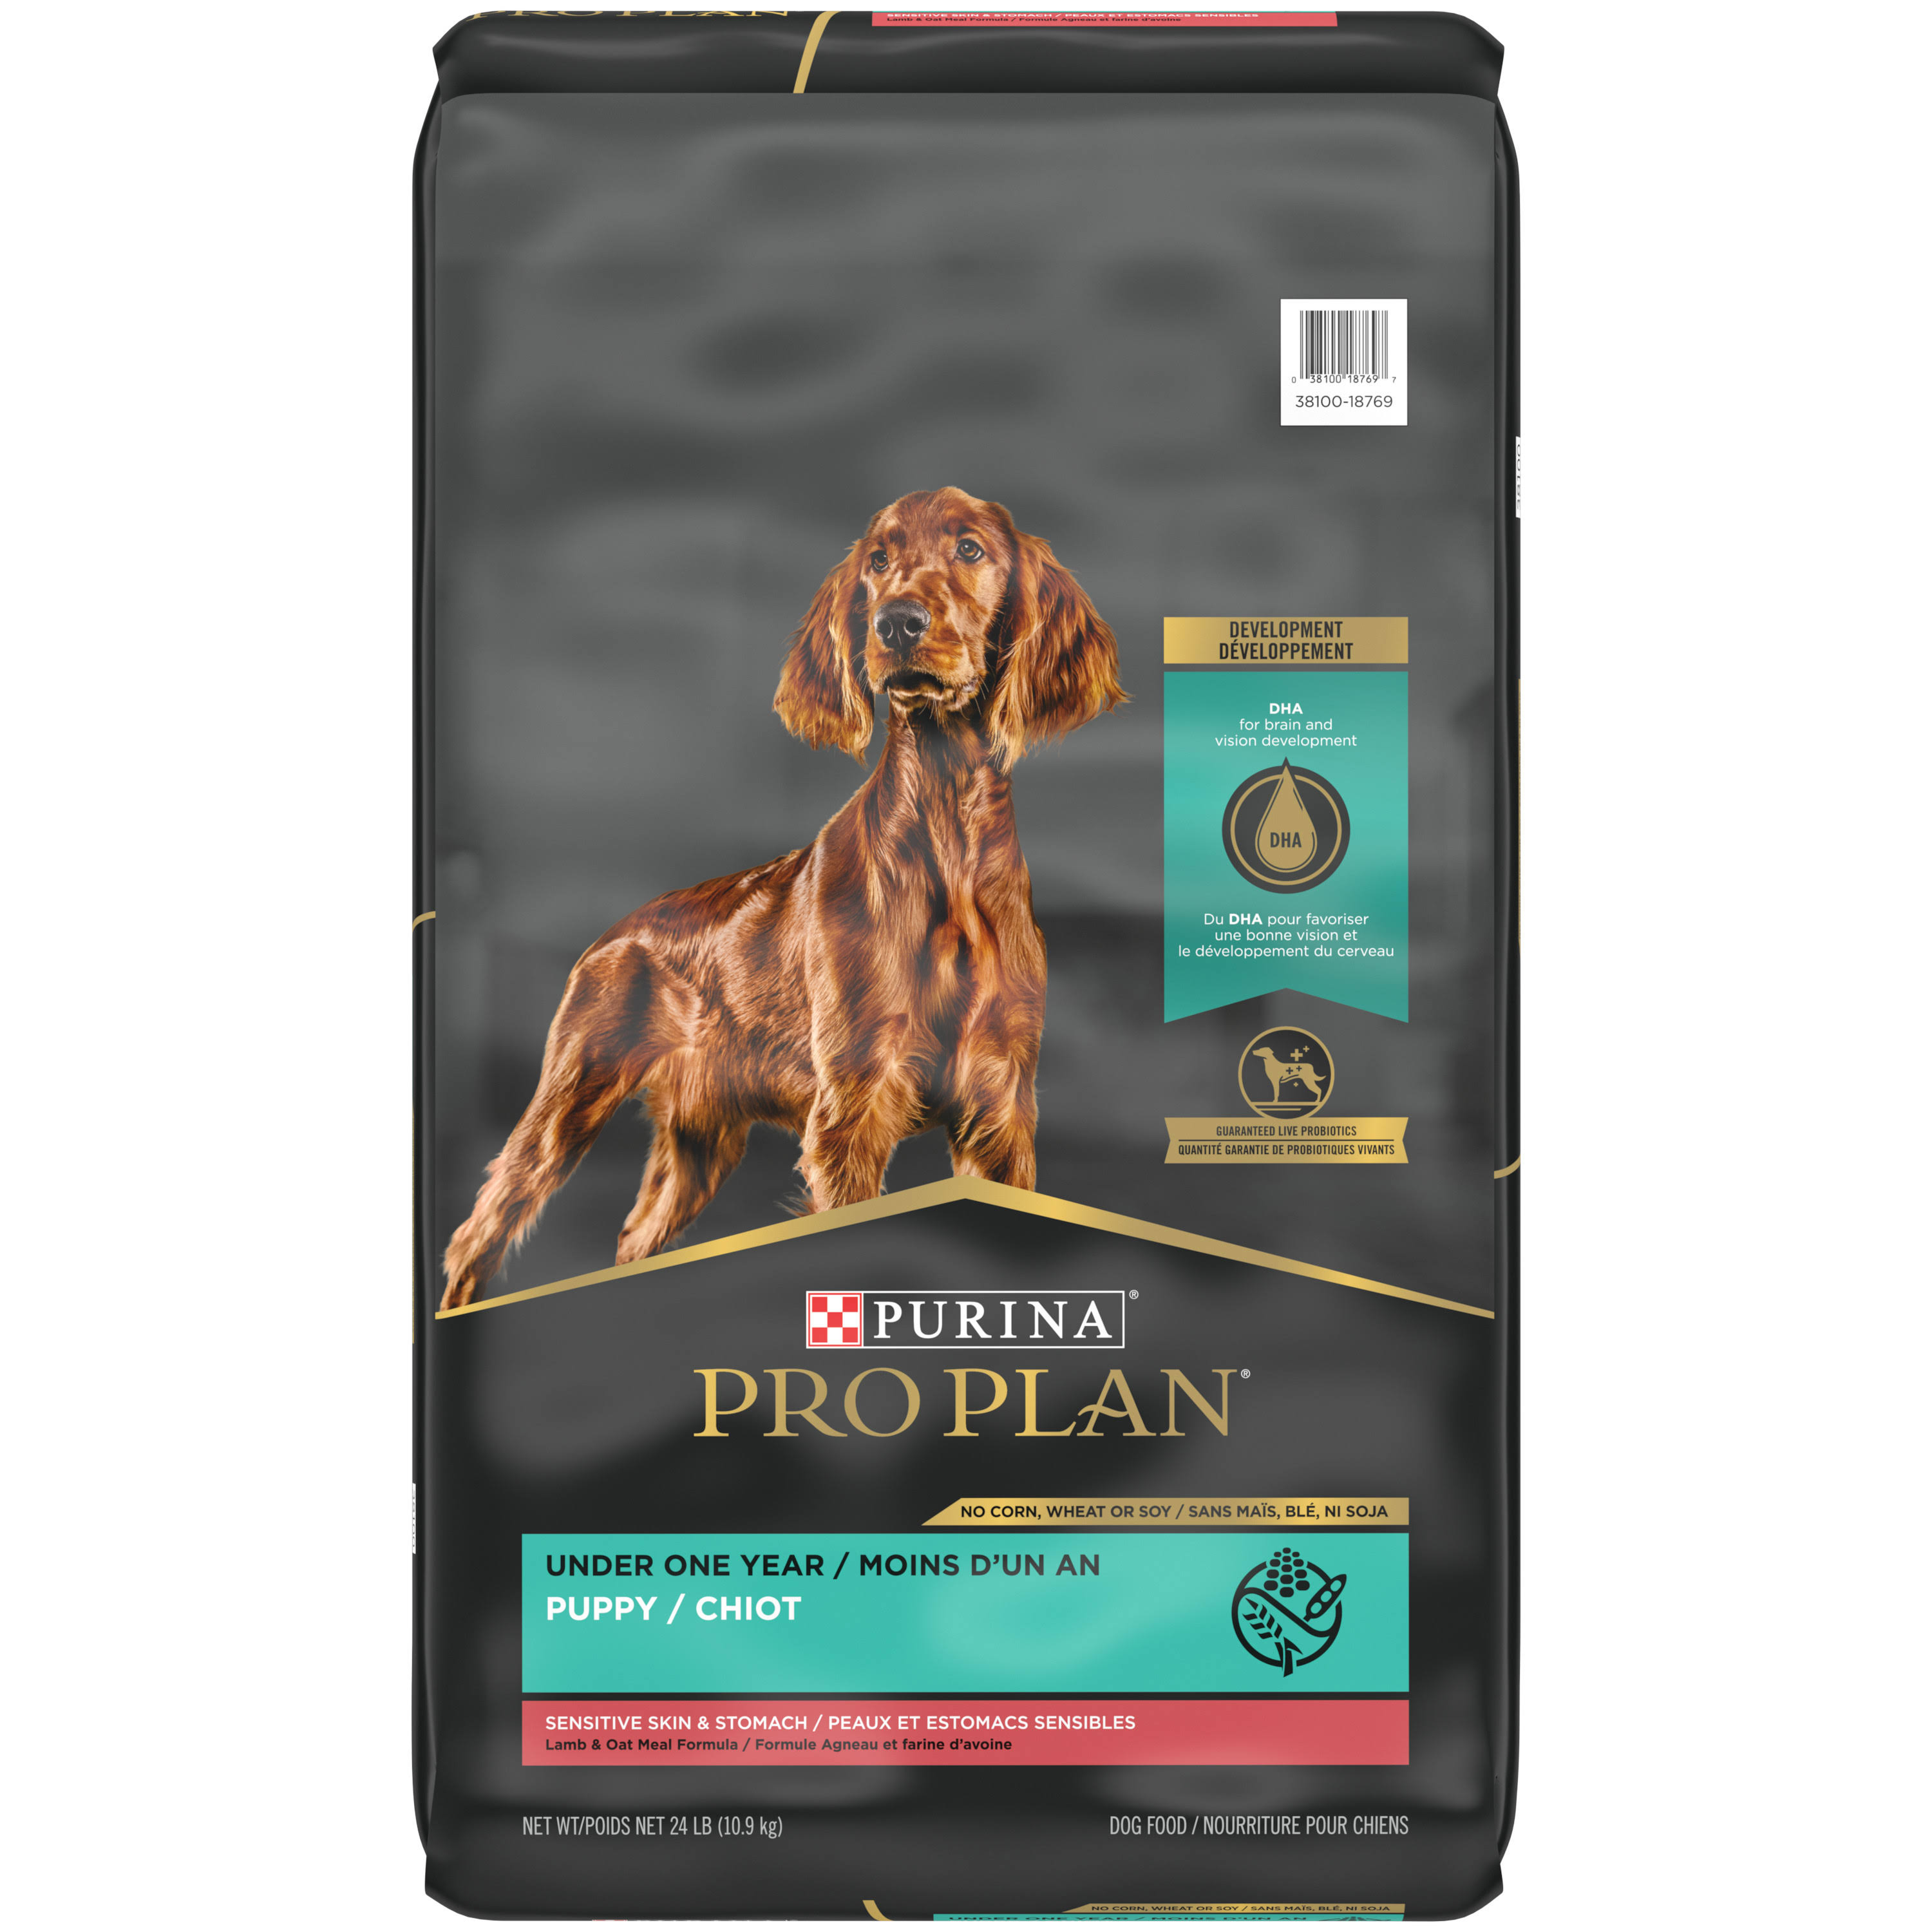 Purina Pro Plan Sensitive Skin And Stomach Puppy Food With Probiotics, Lamb & Oat Meal Formula - 24 Lb Bag